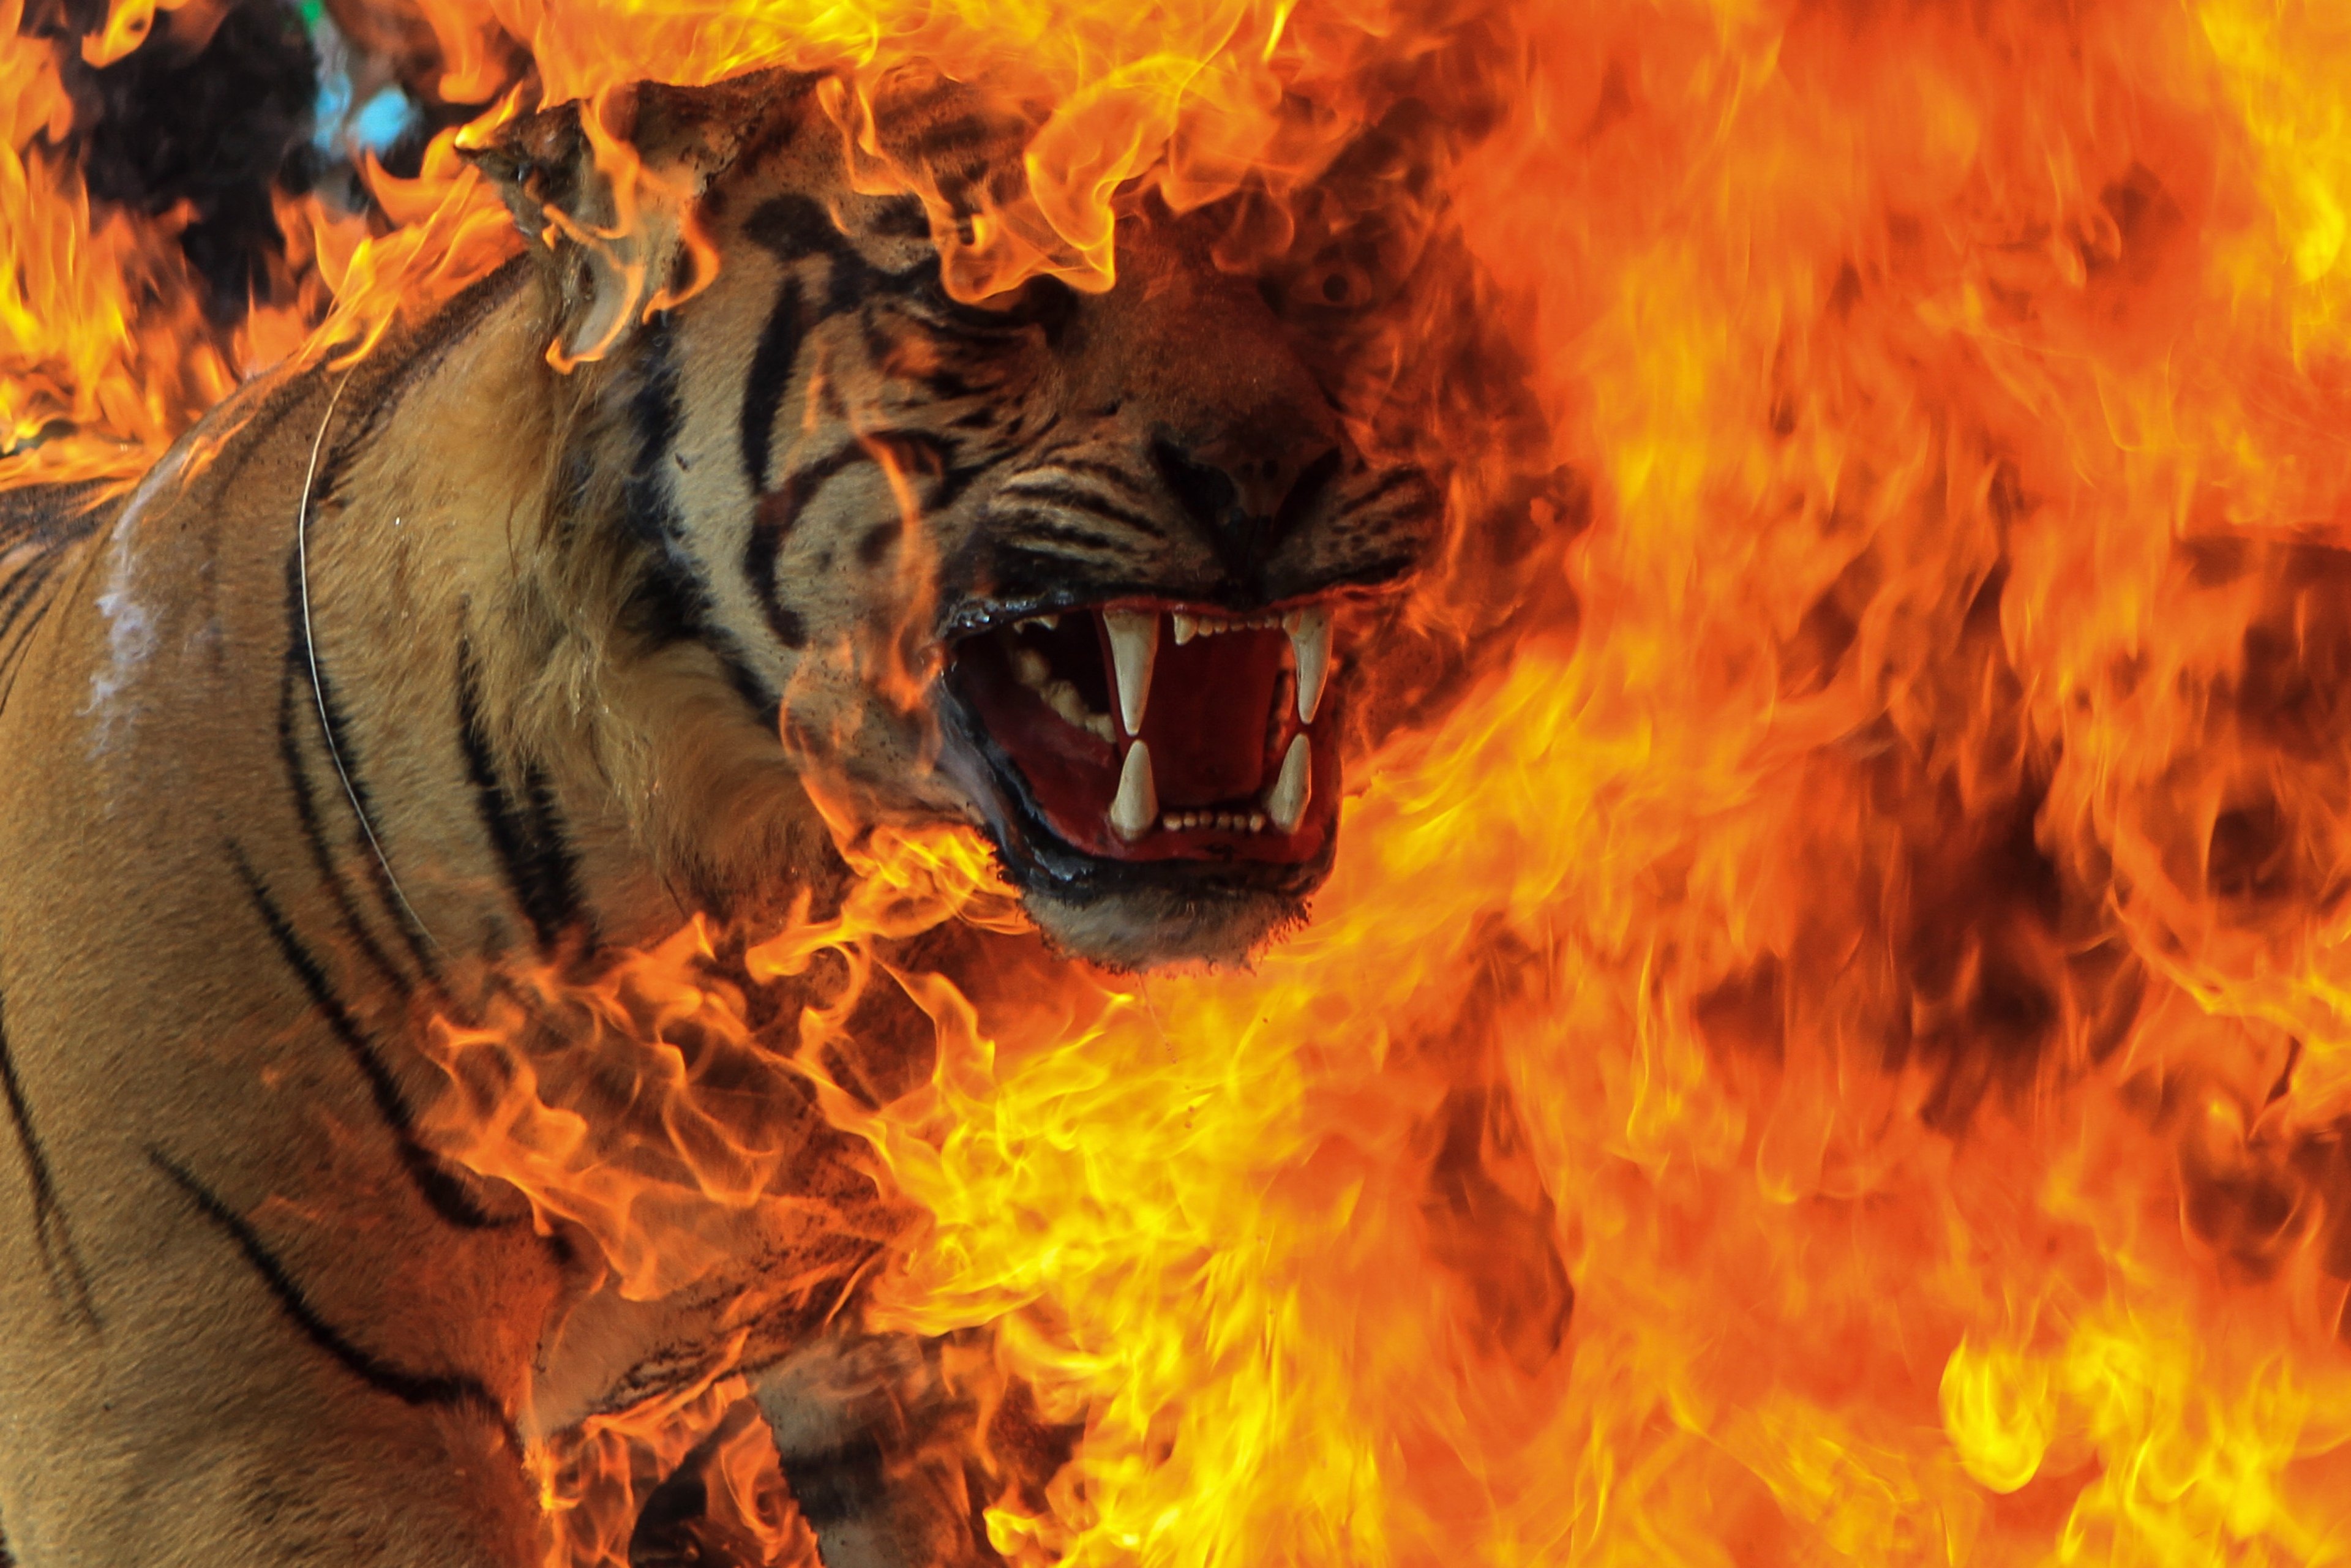 Indonesian authorities burn illegal tiger skins in March 2022. Photo: Hafidz Trijatnika